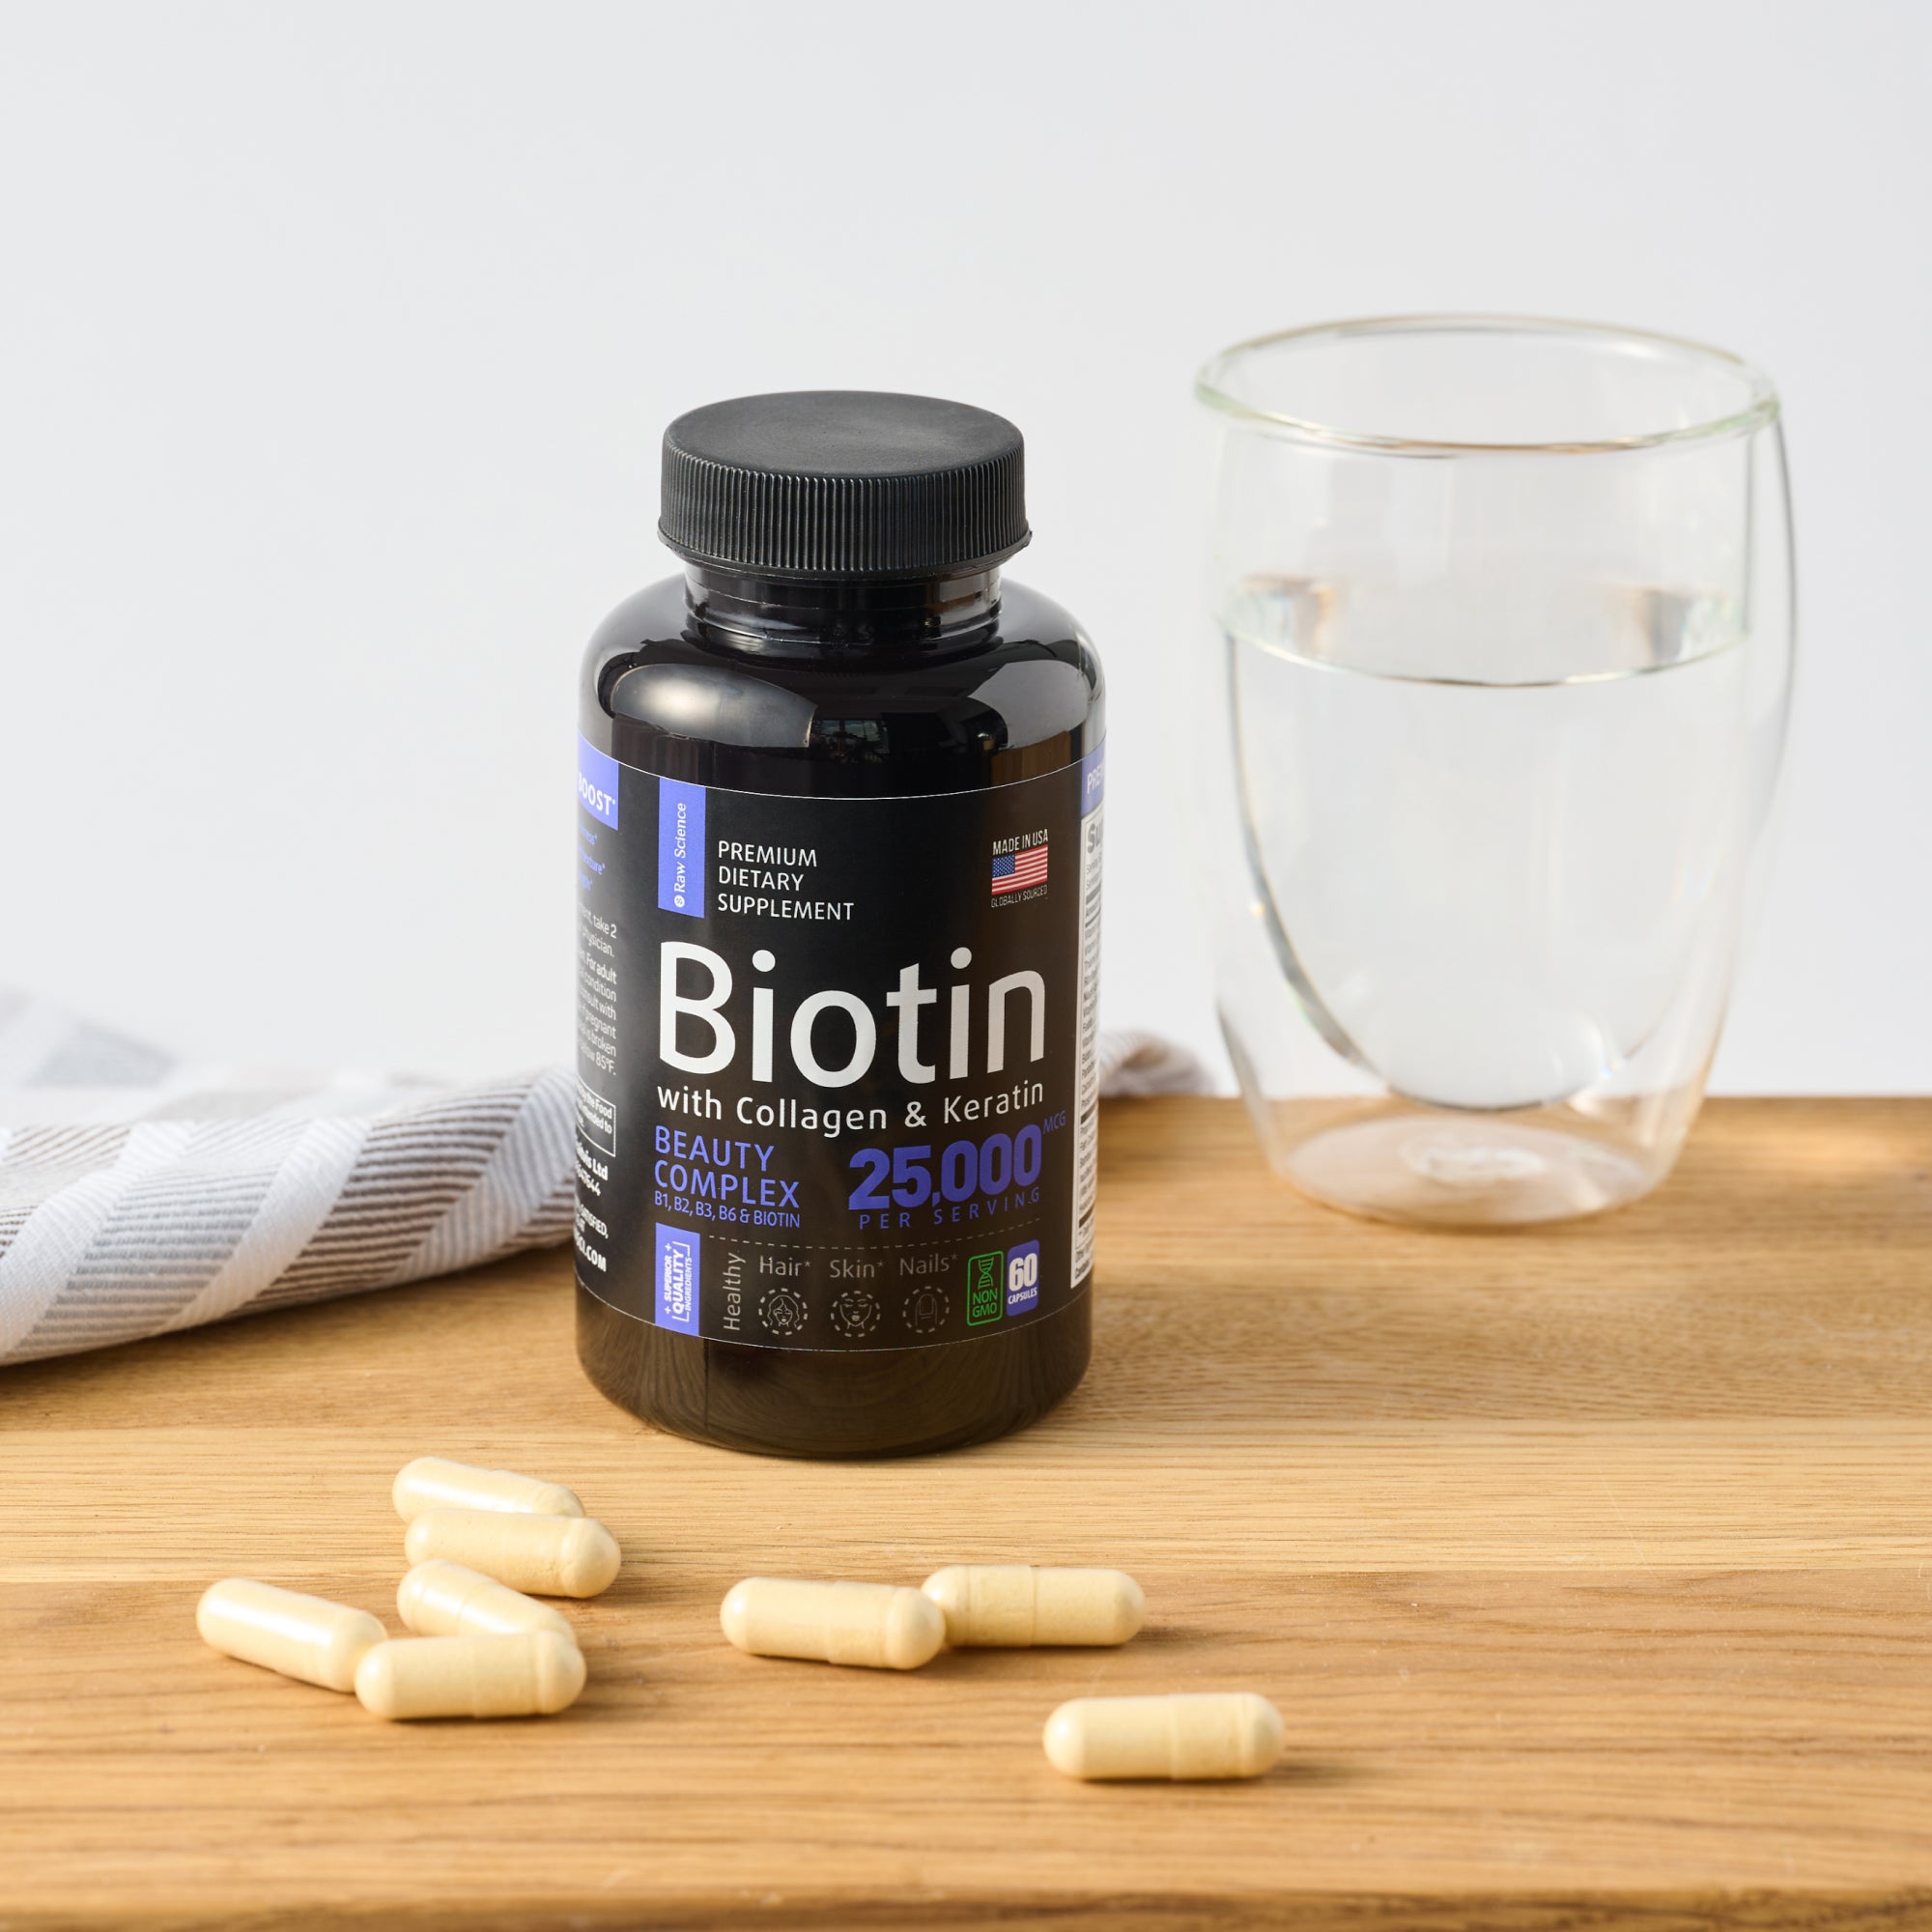 Biotin Softgels - Get Healthier Hair, Skin & Nails